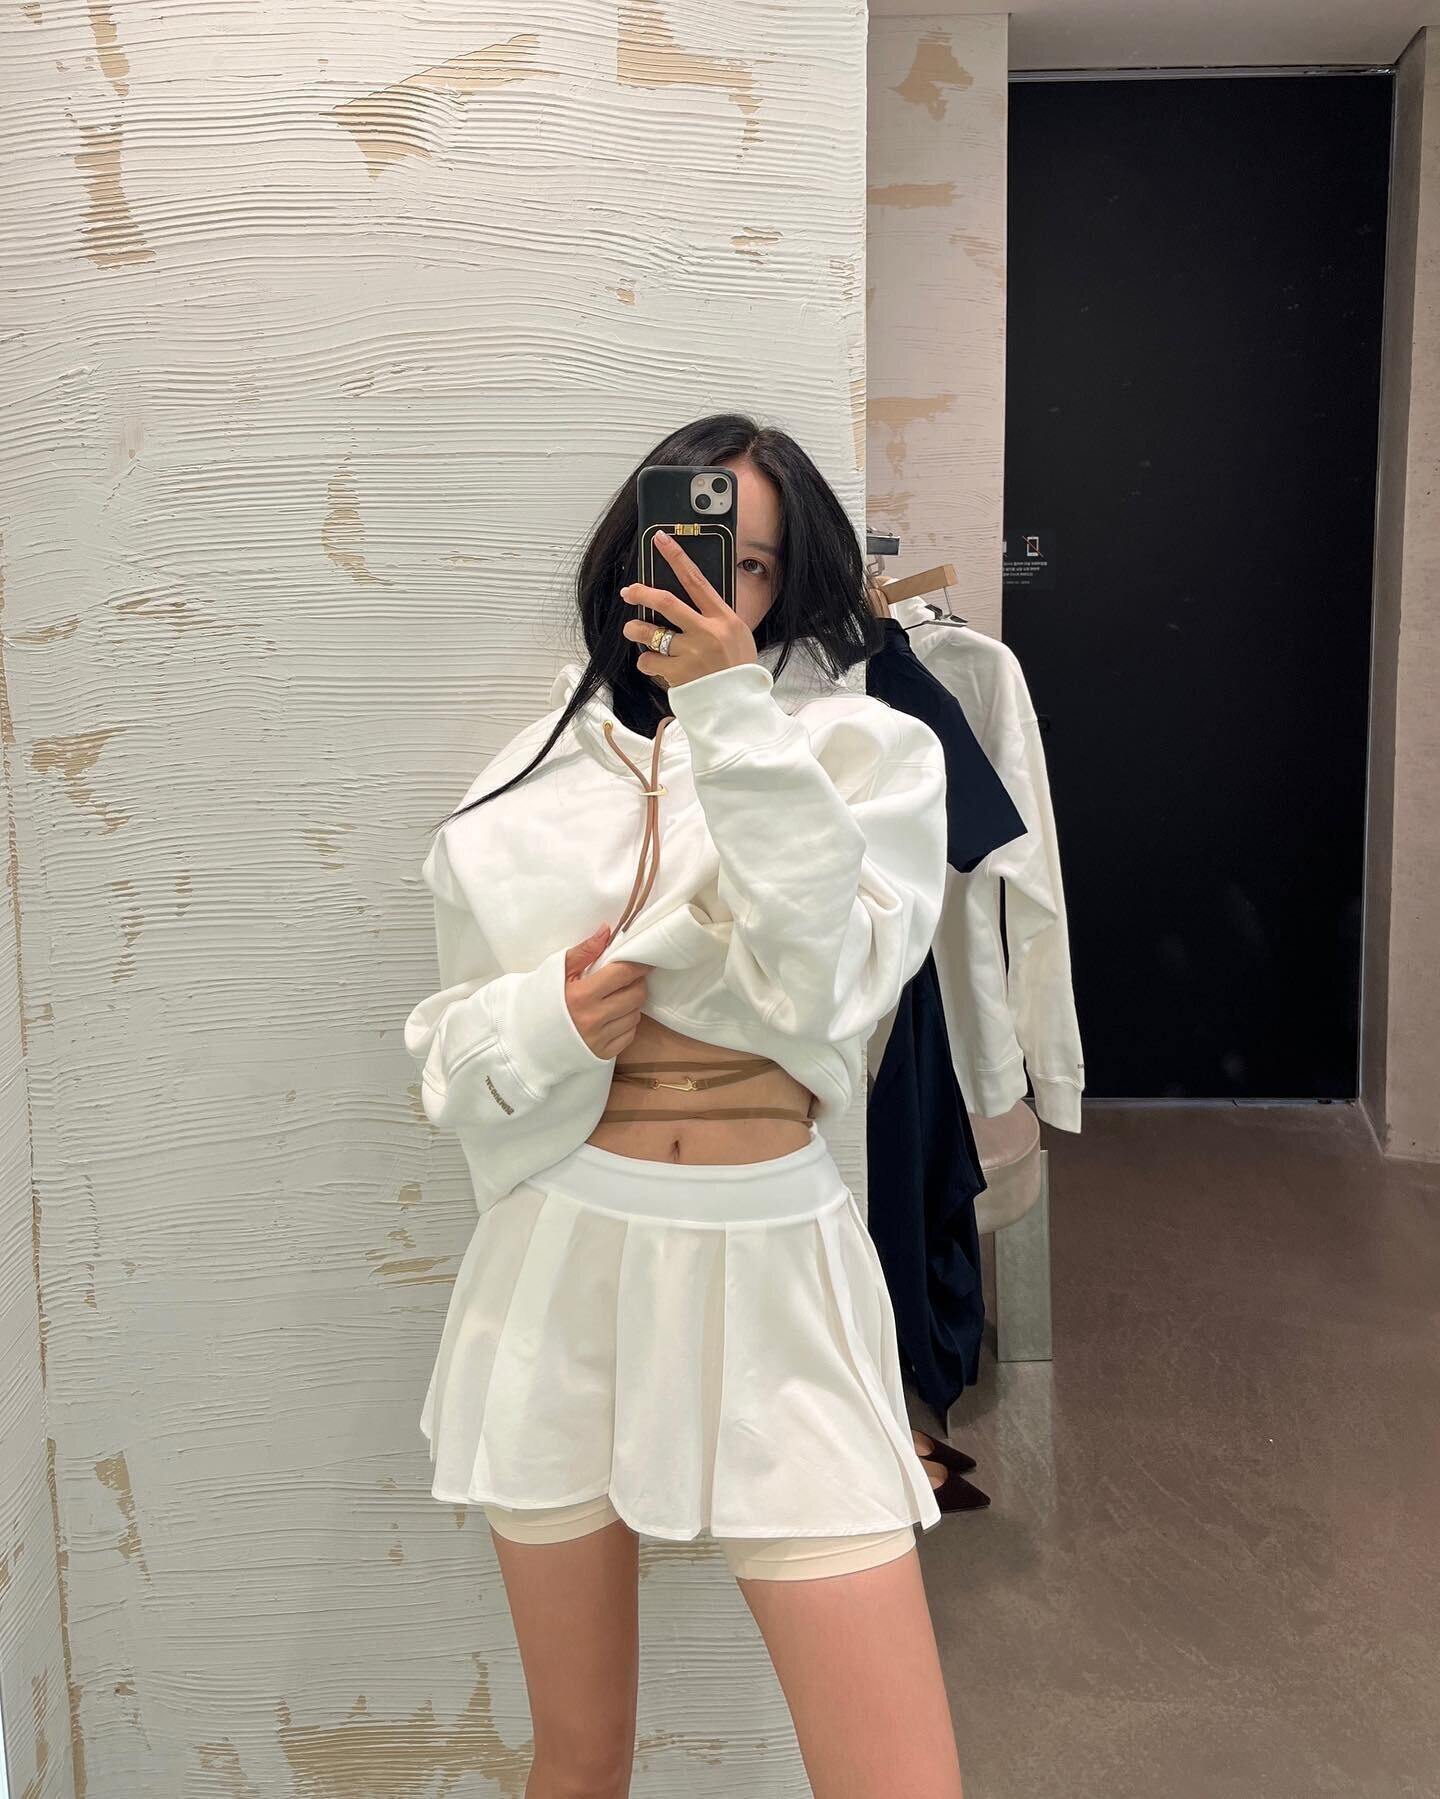 220804 Hyomin Instagram Update | kpopping